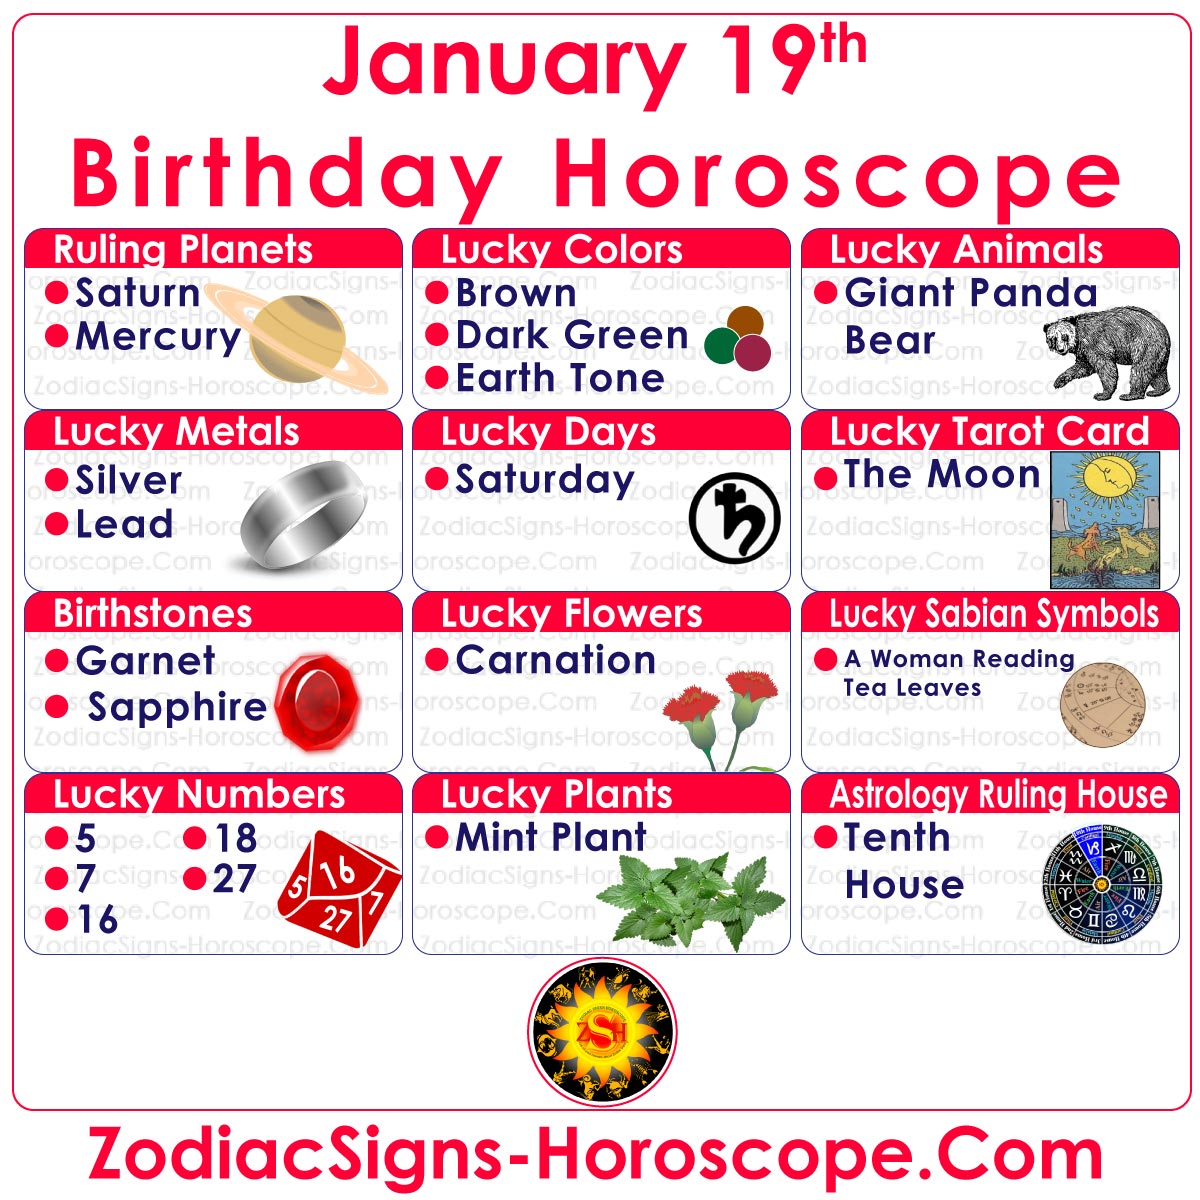 horoscop capricorn 19 januaryie